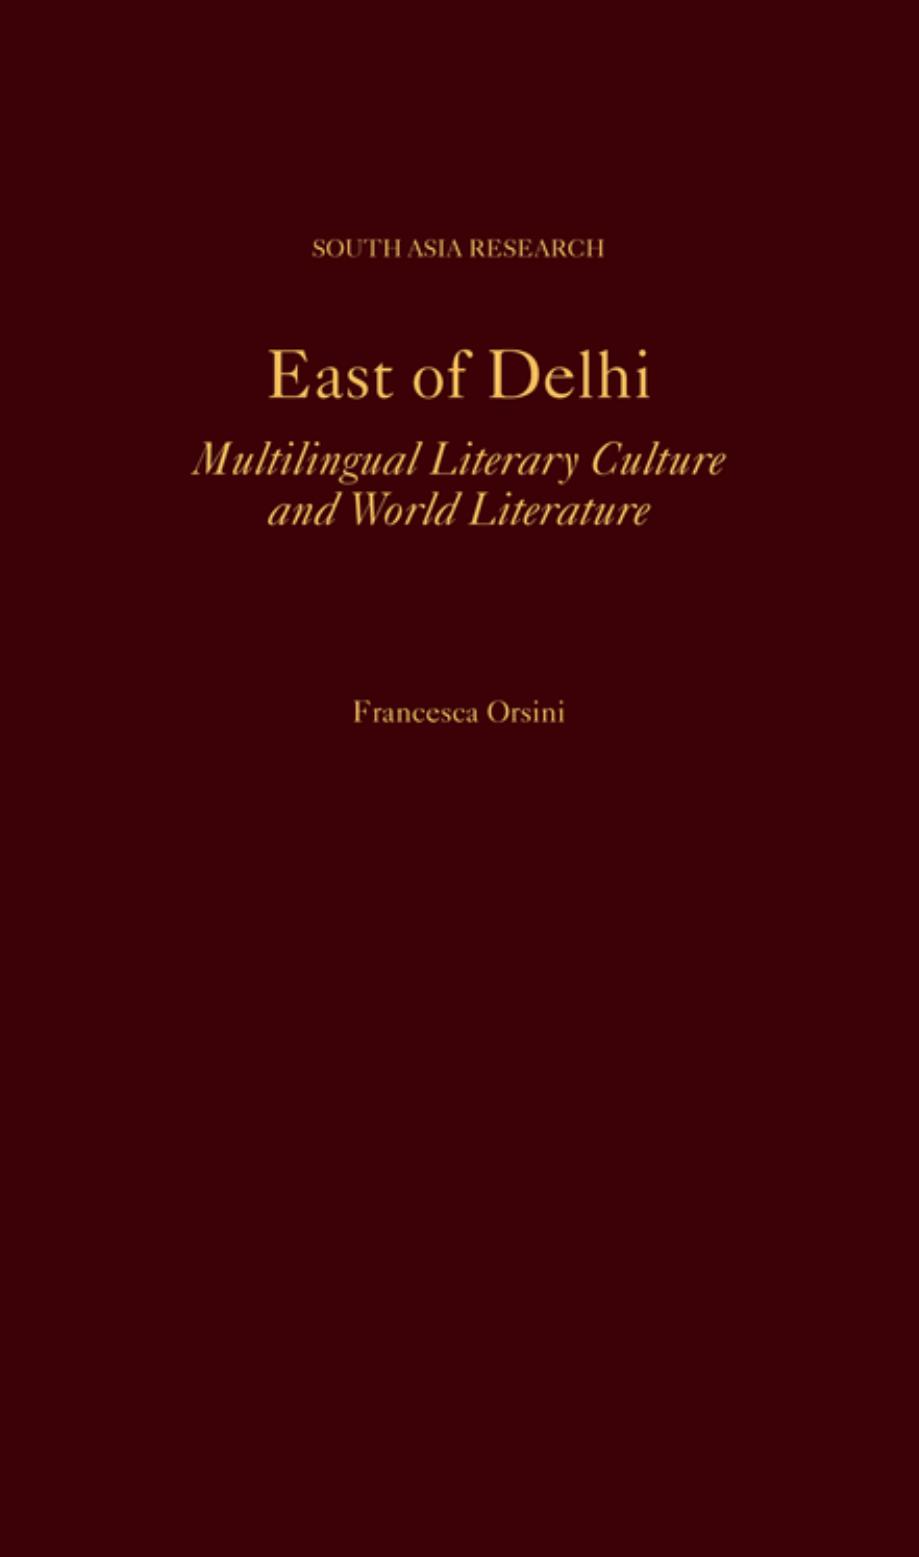 East of Delhi: Multilingual Literary Culture and World Literature by Francesca Orsini